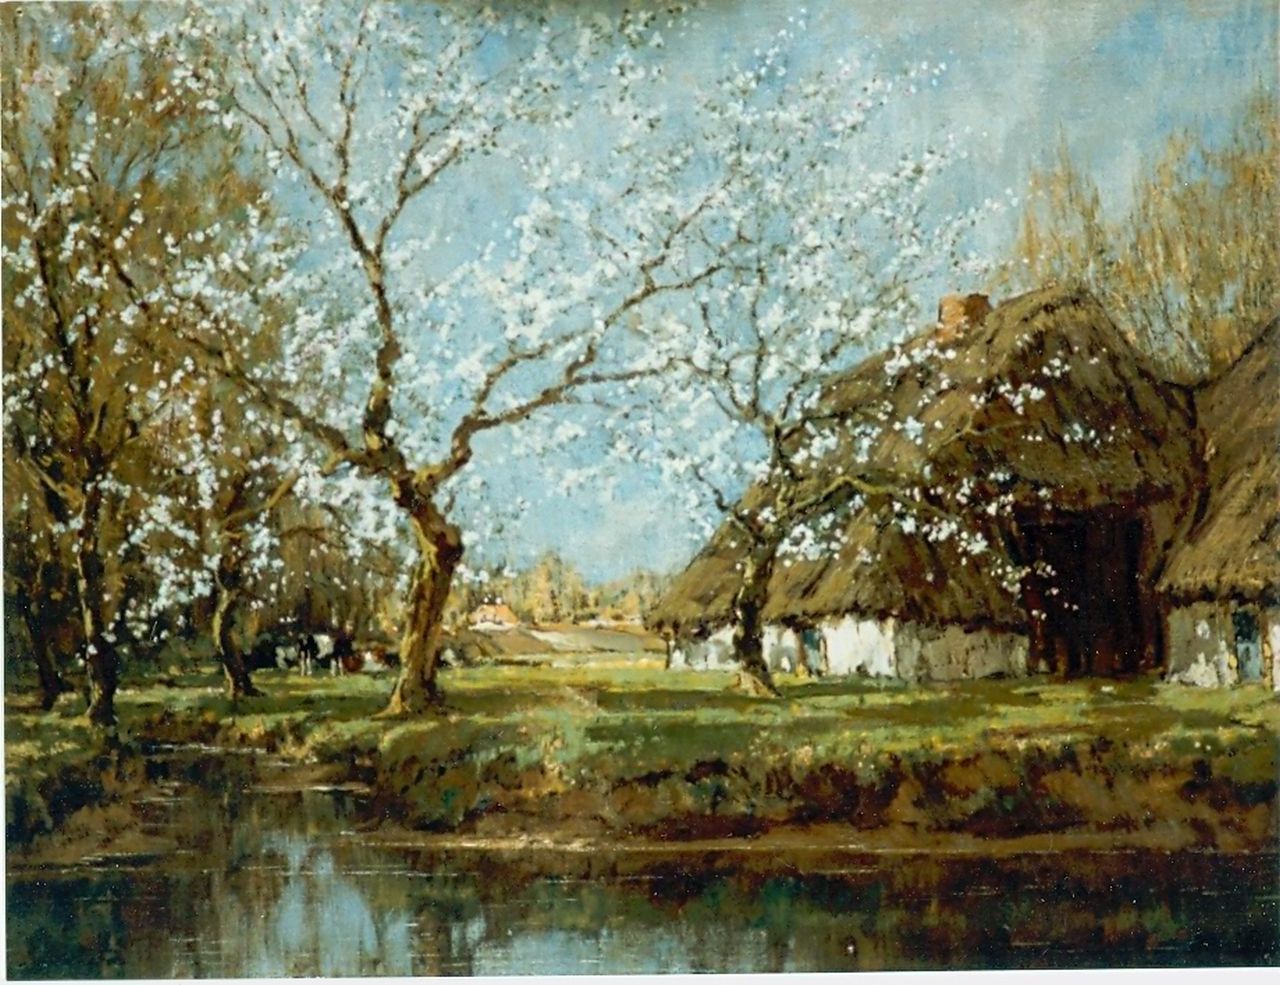 Gorter A.M.  | 'Arnold' Marc Gorter, A blossoming orchard, Öl auf Leinwand 67,3 x 84,8 cm, signed l.r.